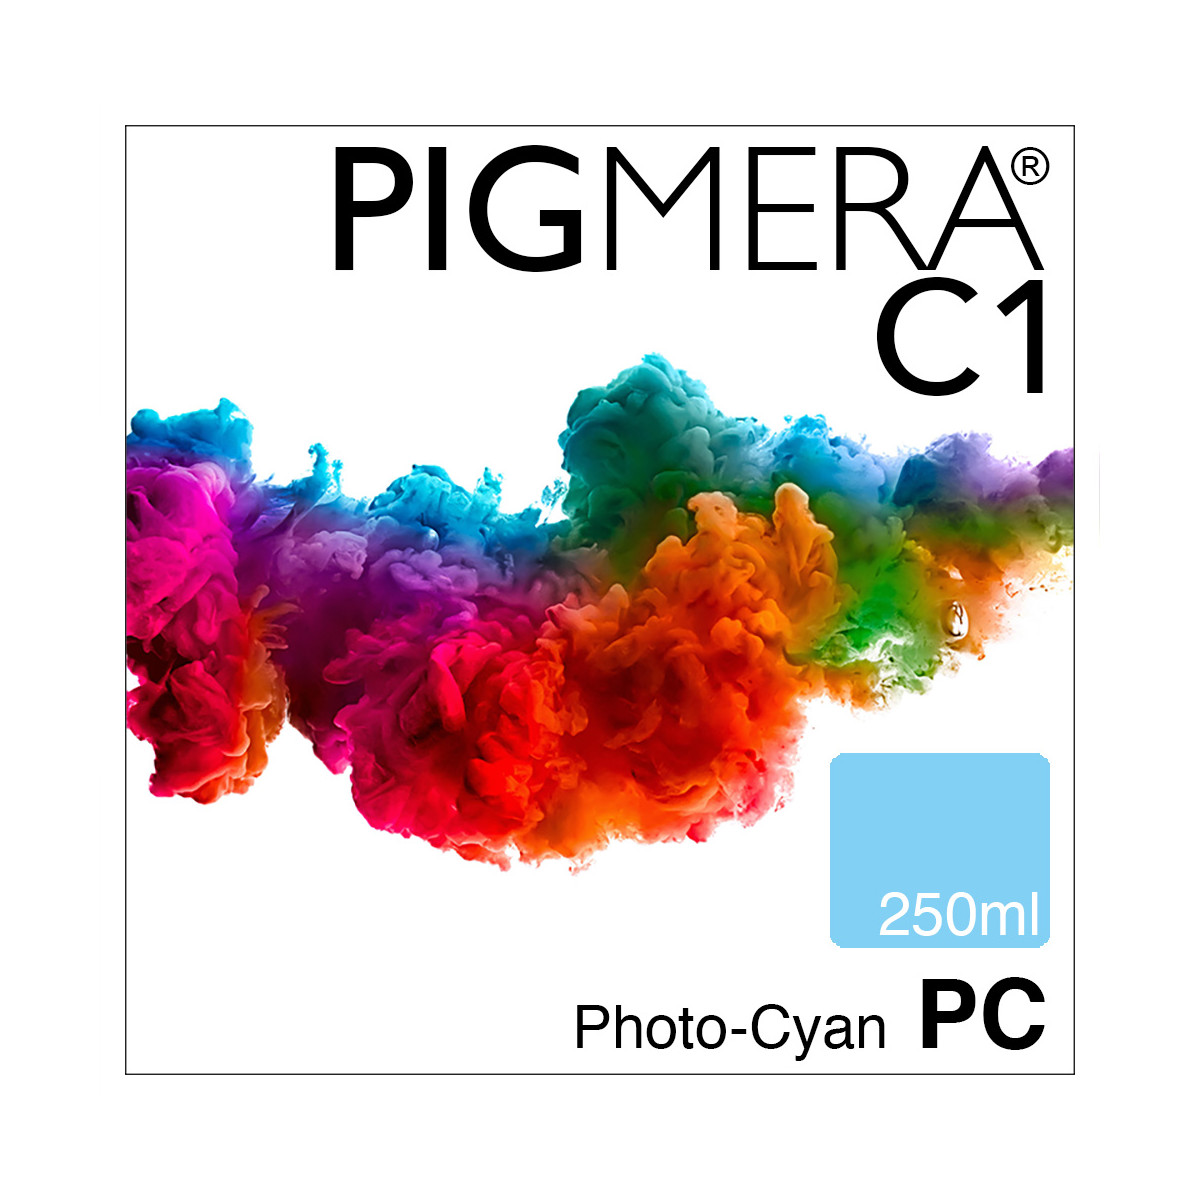 farbenwerk Pigmera C1 Bottle Photo-Cyan 250ml